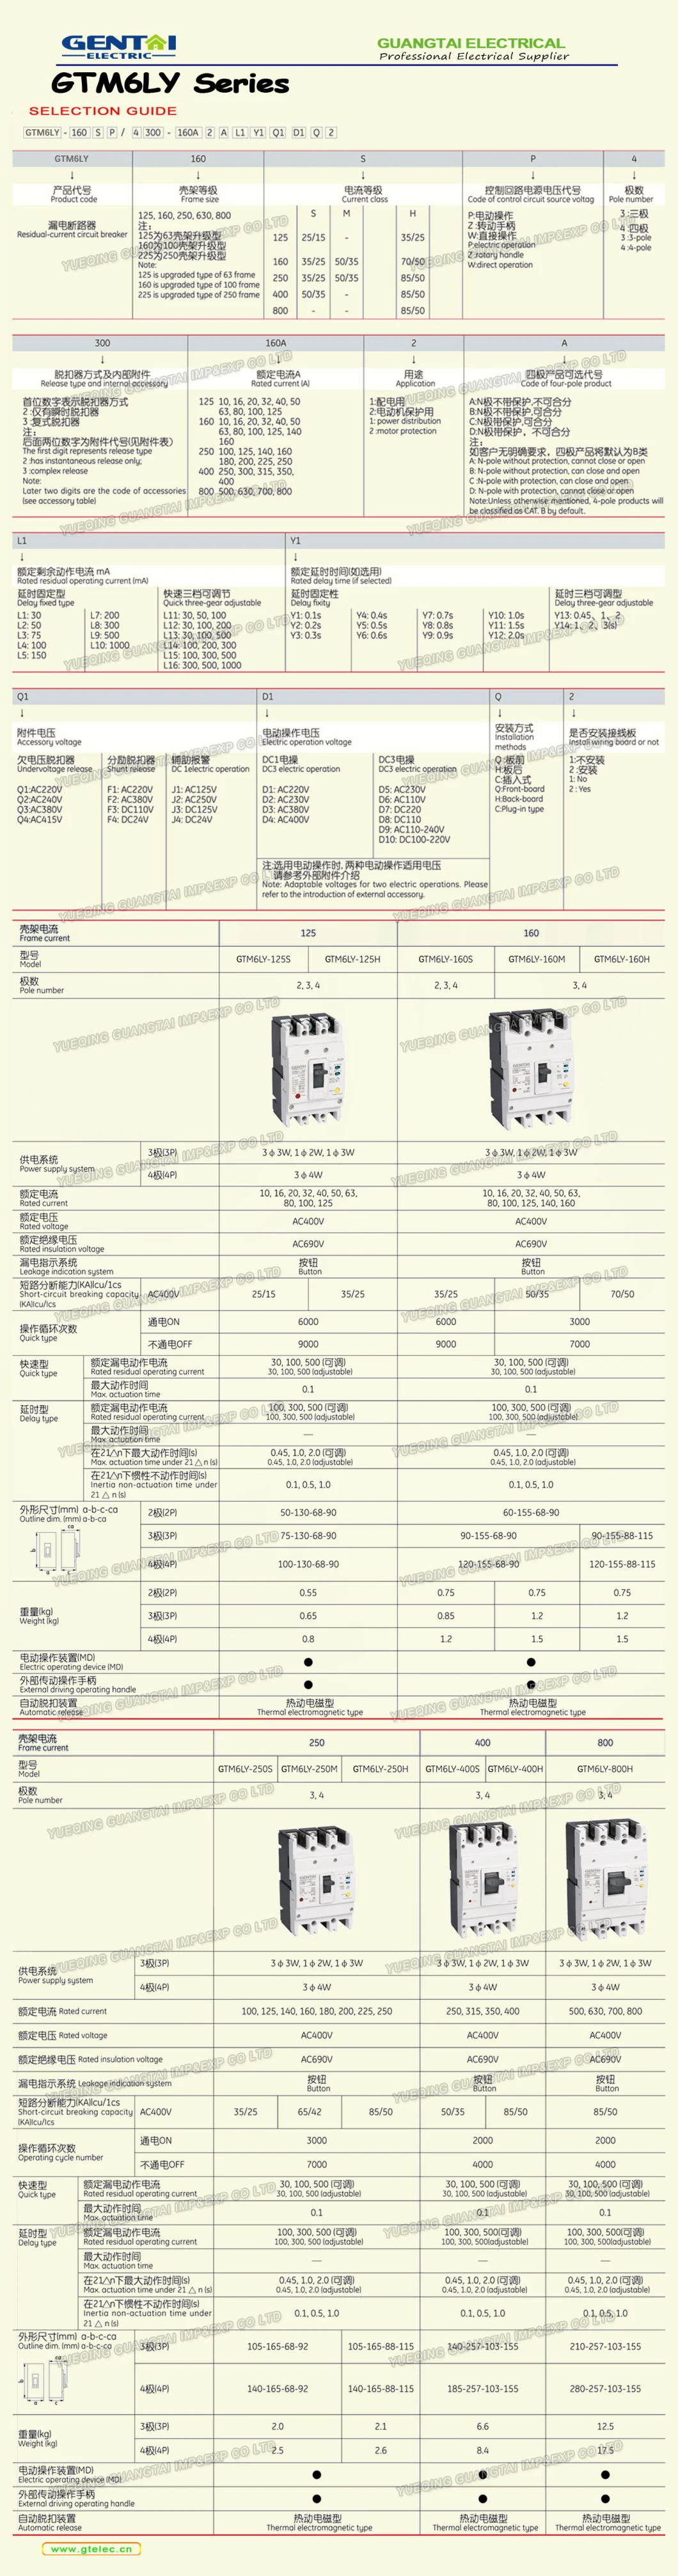 Premium Gtm6EL 3p 4p 160A MCCB Residual Current Intelligent Electronic Adjustable Type Moulded Case Circuit Breaker